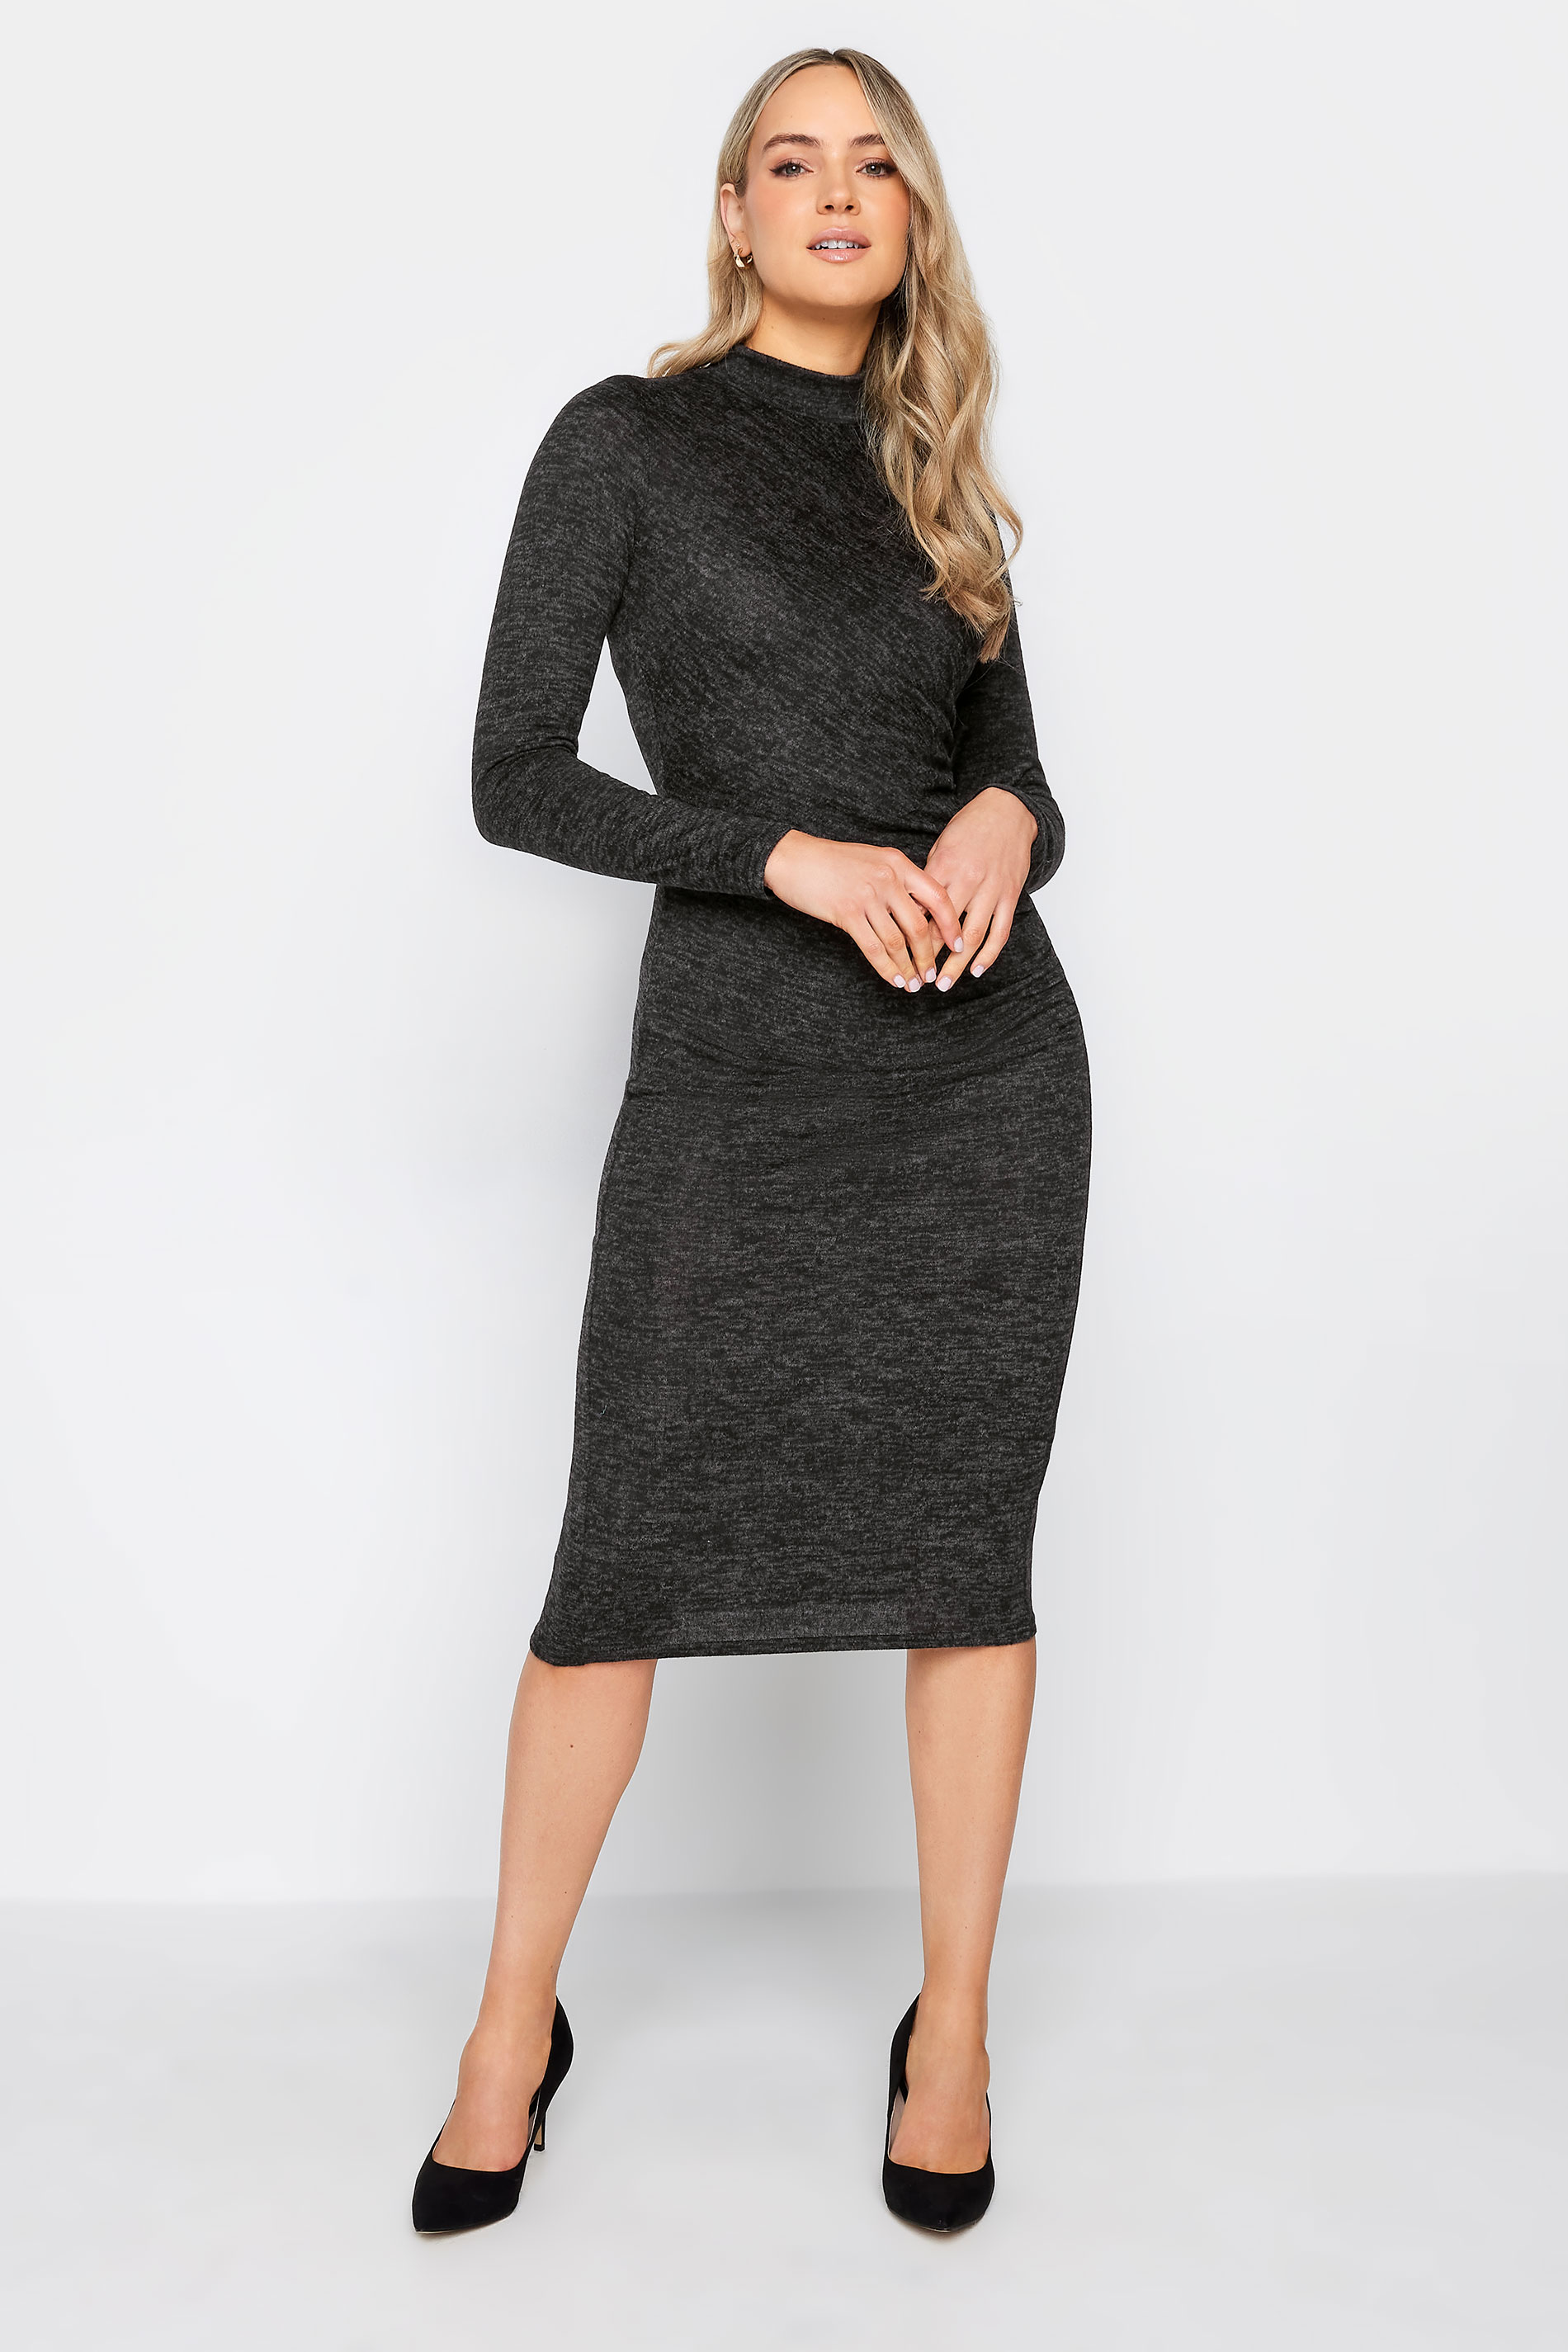 LTS Tall Women's Charcoal Grey Ruched Midi Dress | Long Tall Sally  1